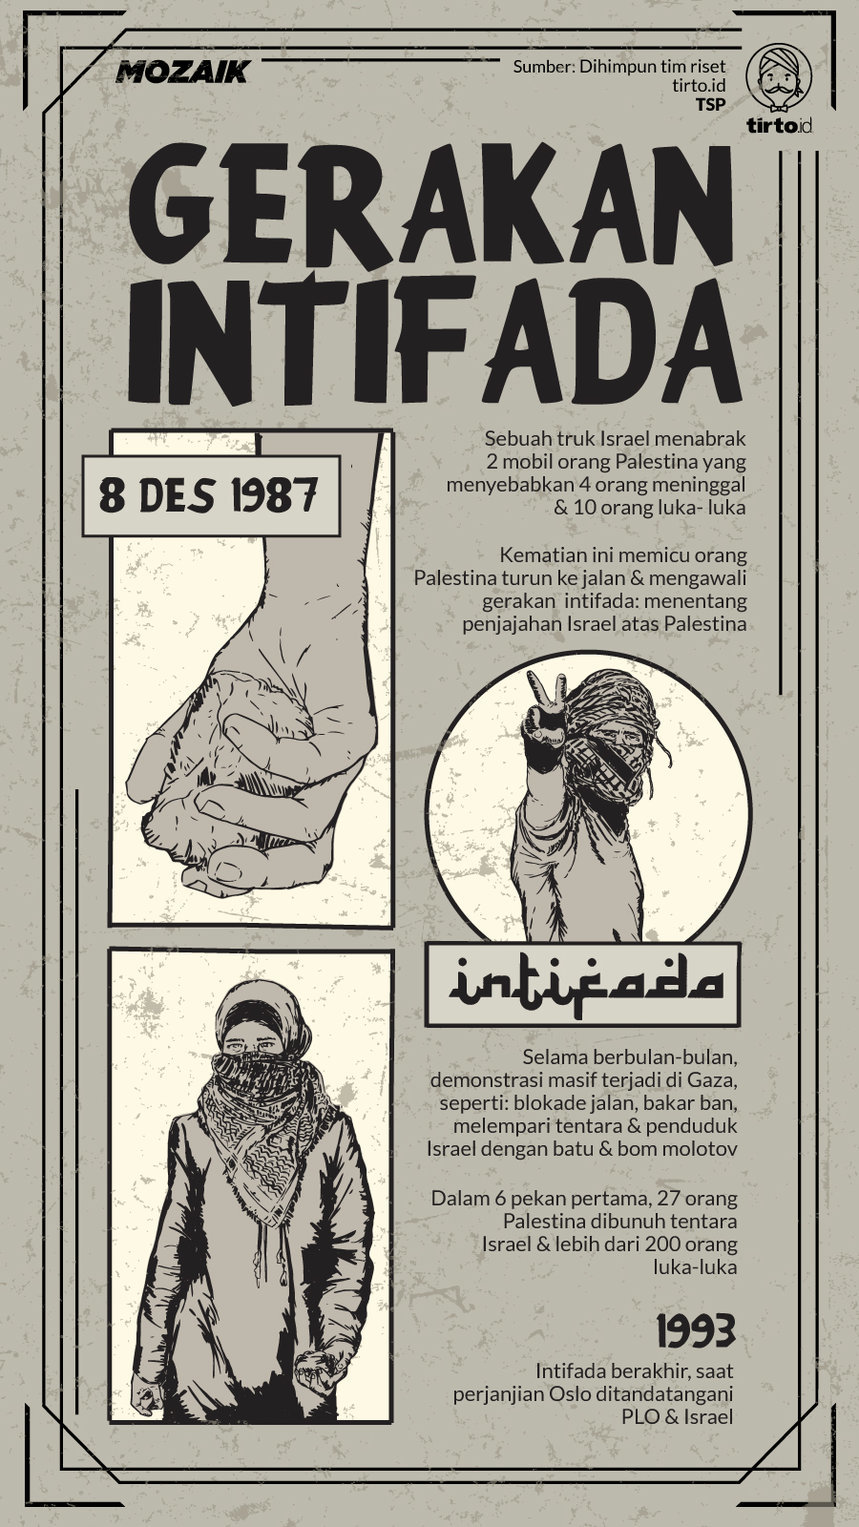 Infografik Mozaik Gerakan Intifada